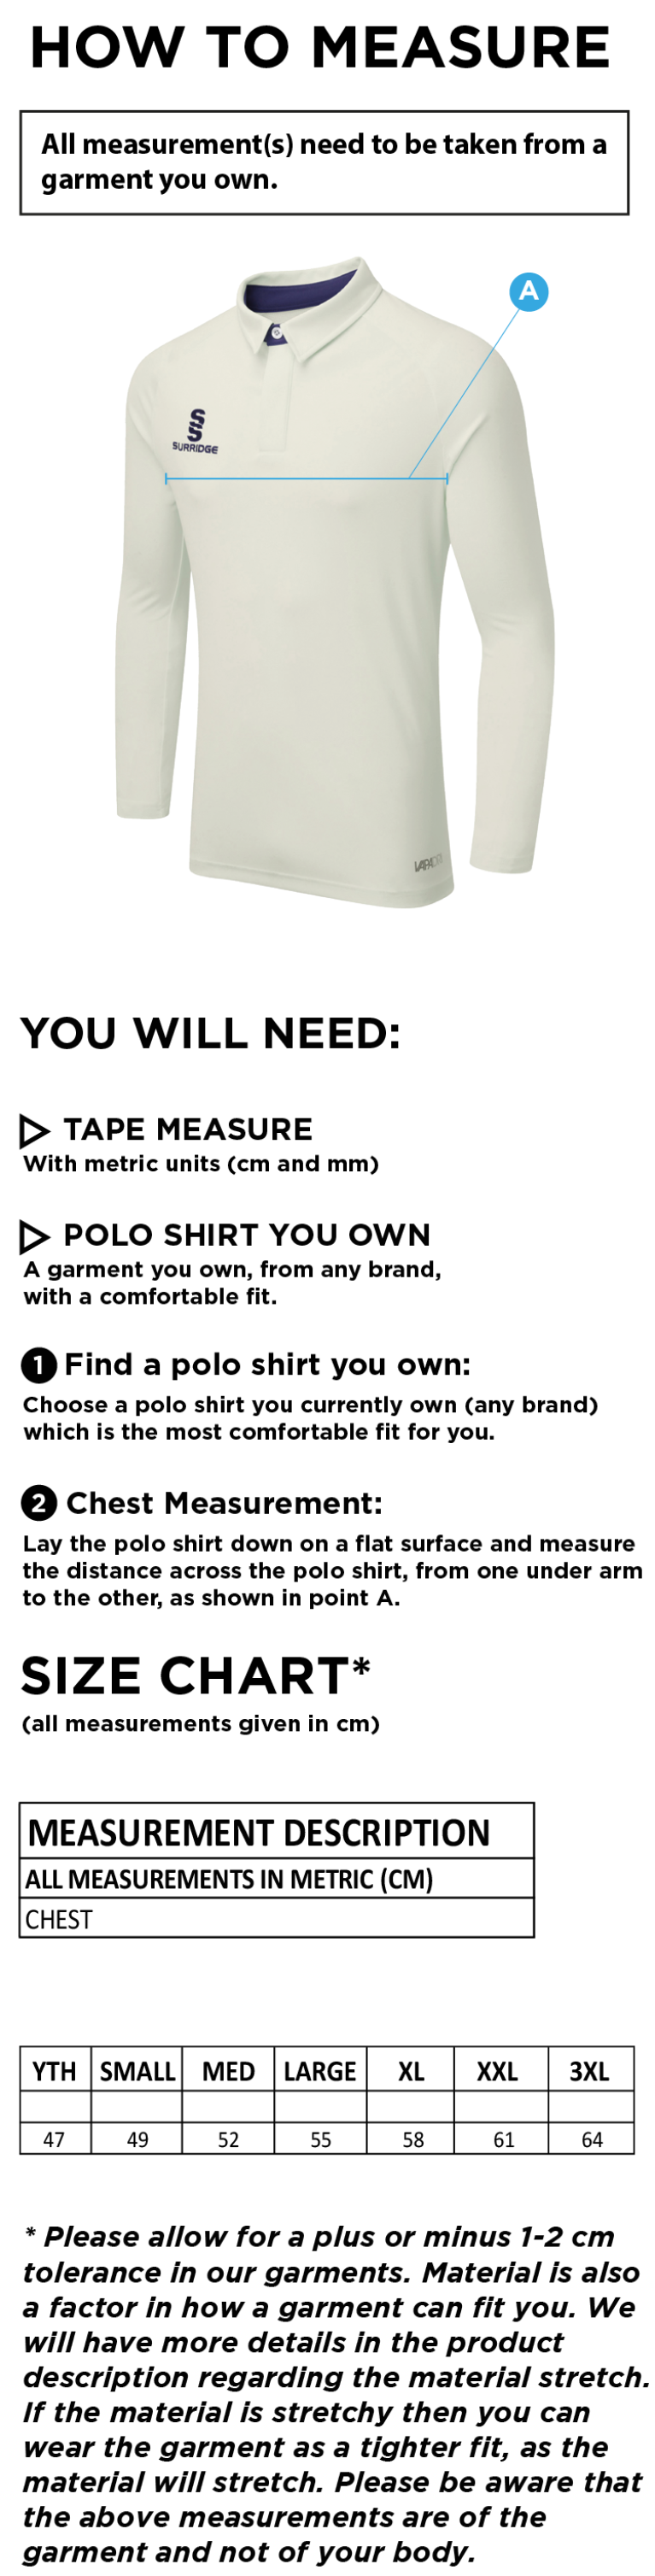 Byfleet CC Senior L/S Tek shirt - Size Guide